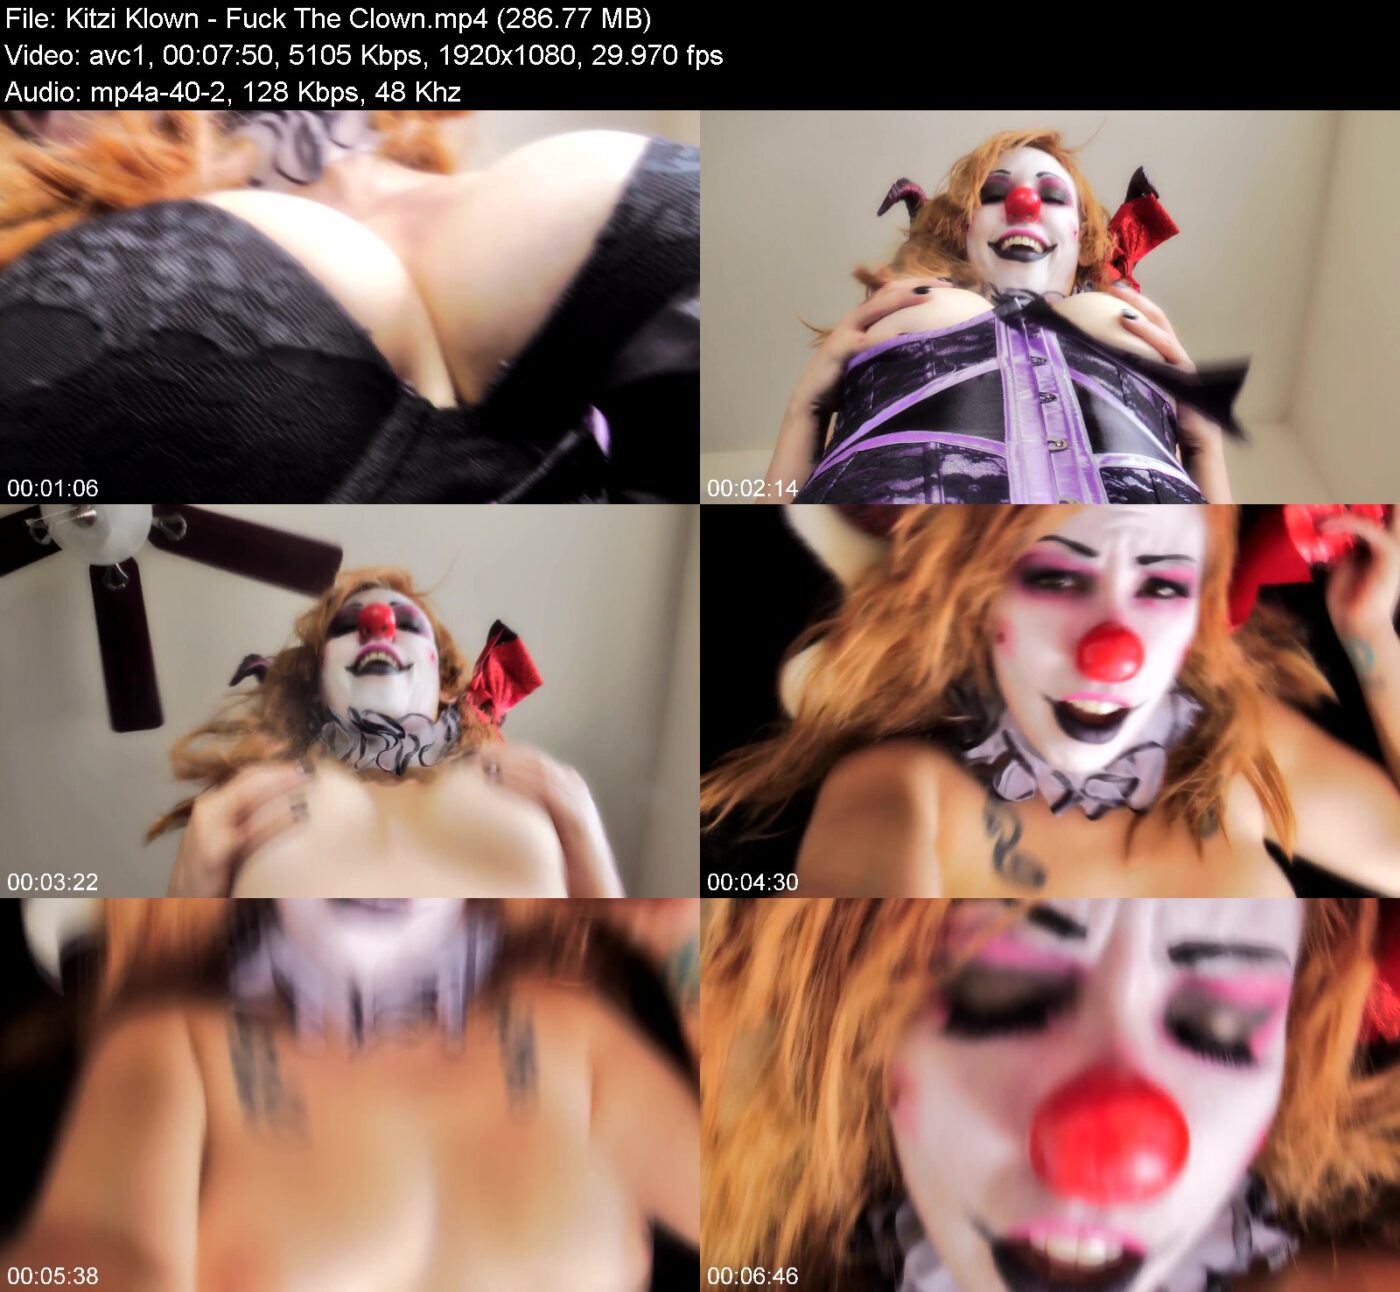 Actress: Kitzi Klown. Title and Studio: Fuck The Clown